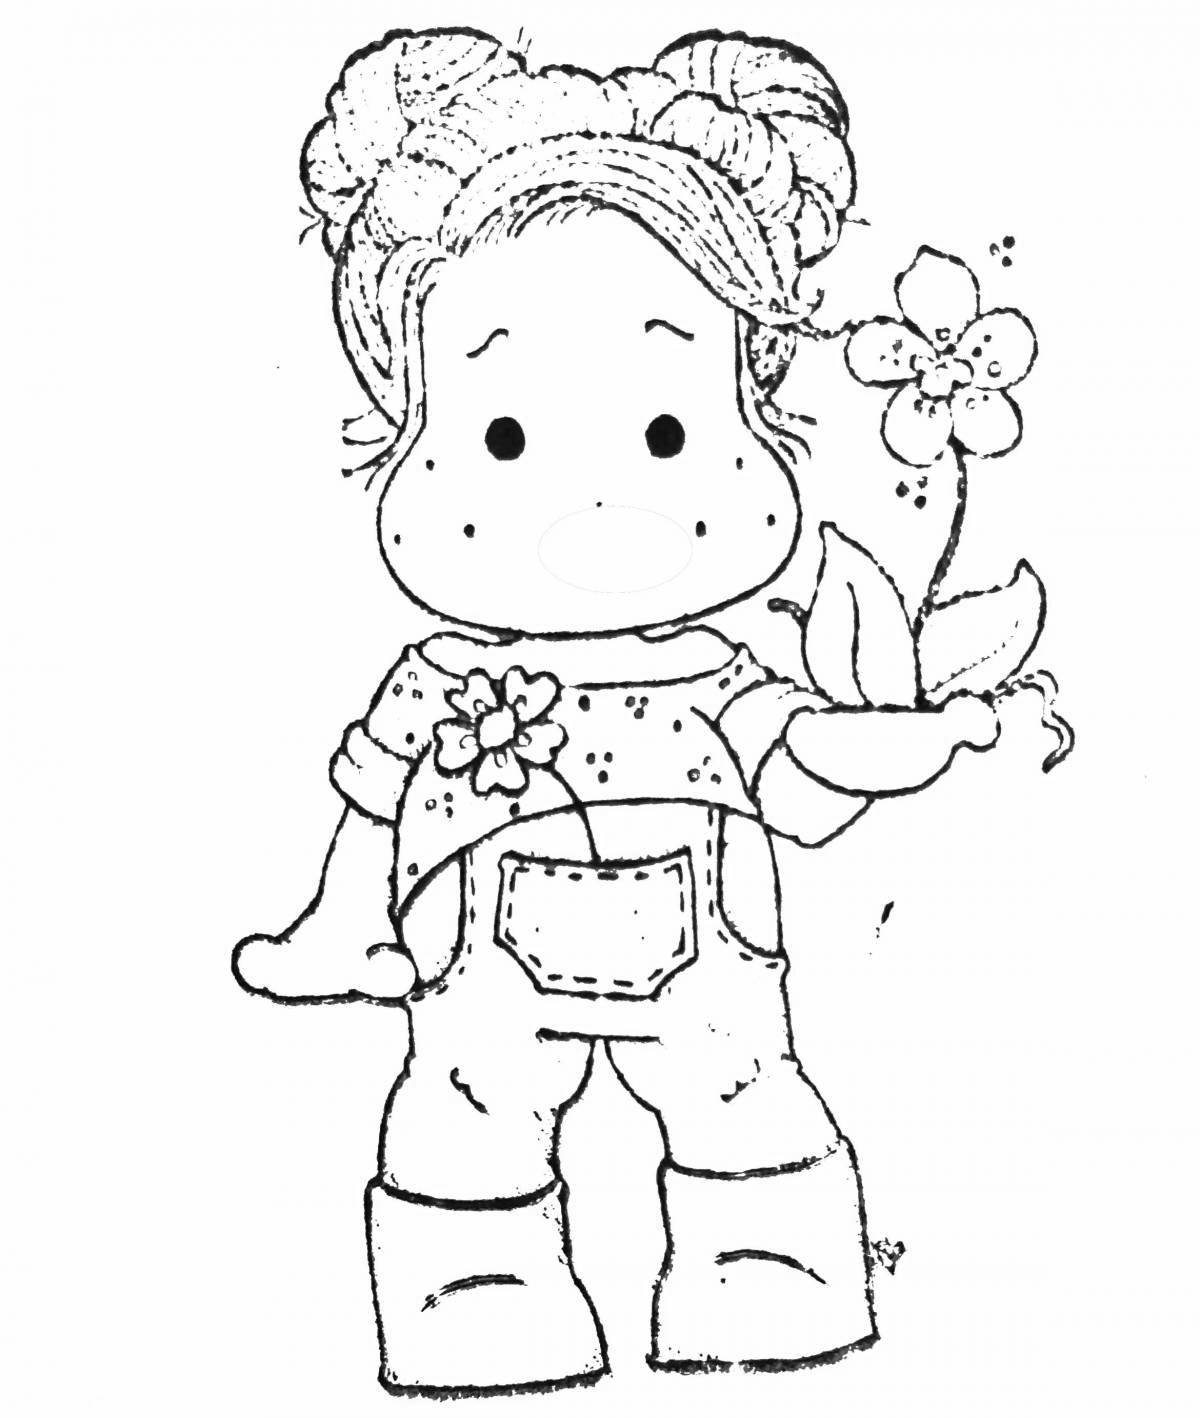 Tilda glamor doll coloring page